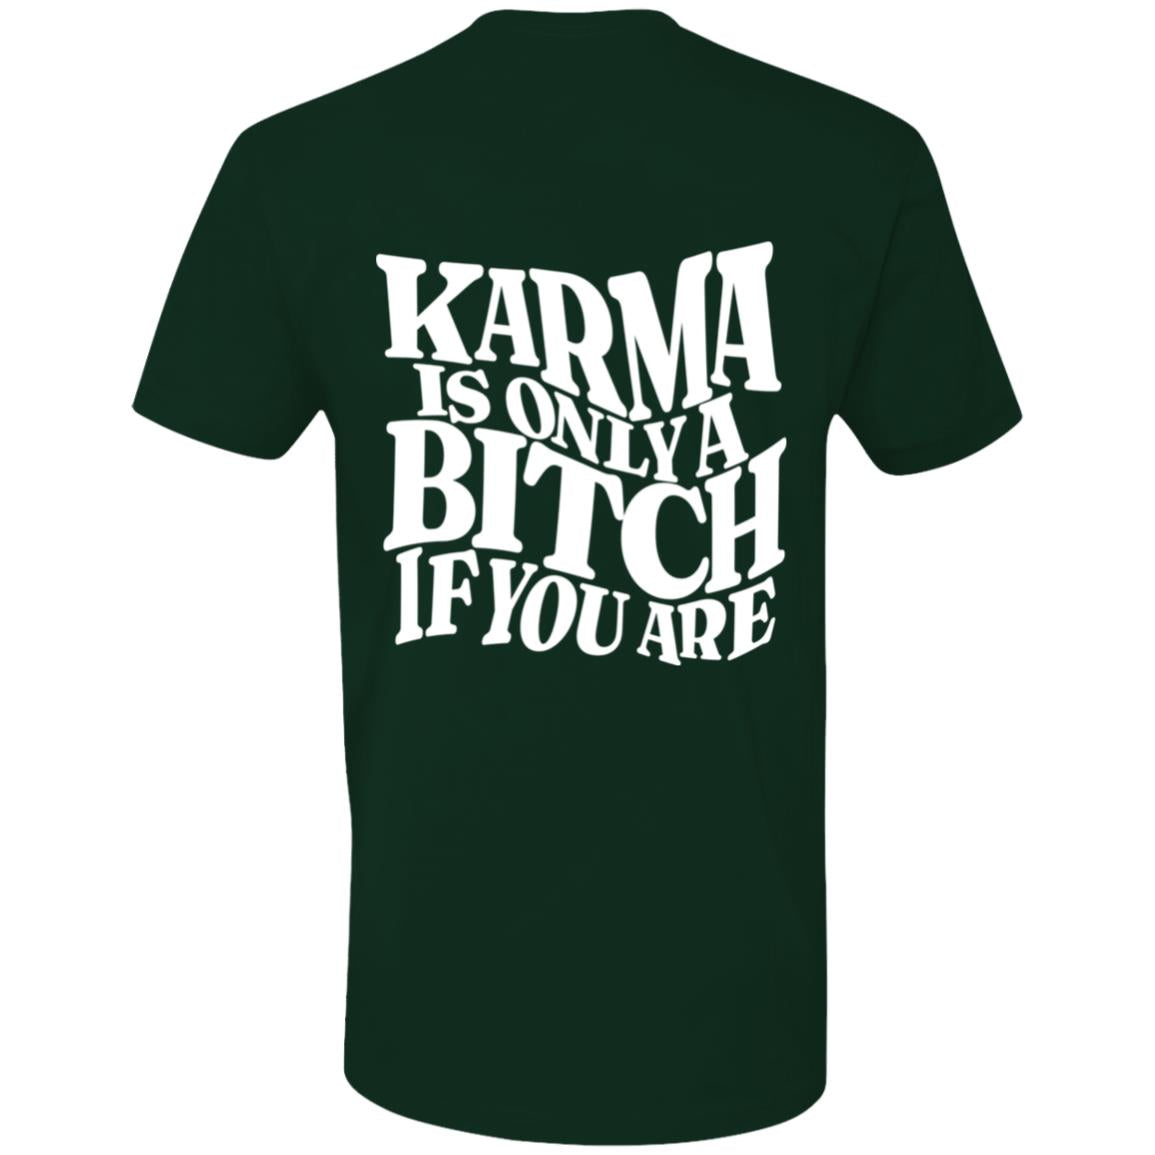 Karma is Only a B*tch T-shirt White